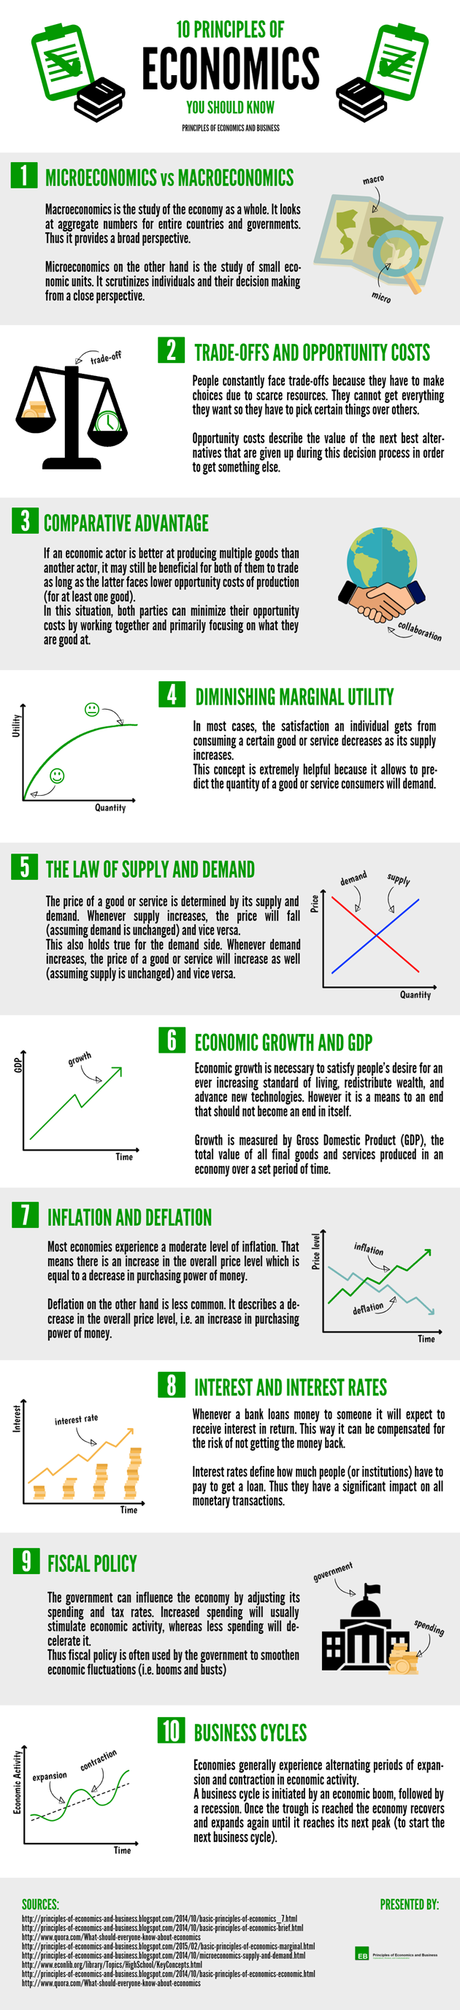 Infographic - 10 Principles of Economics You Should Know